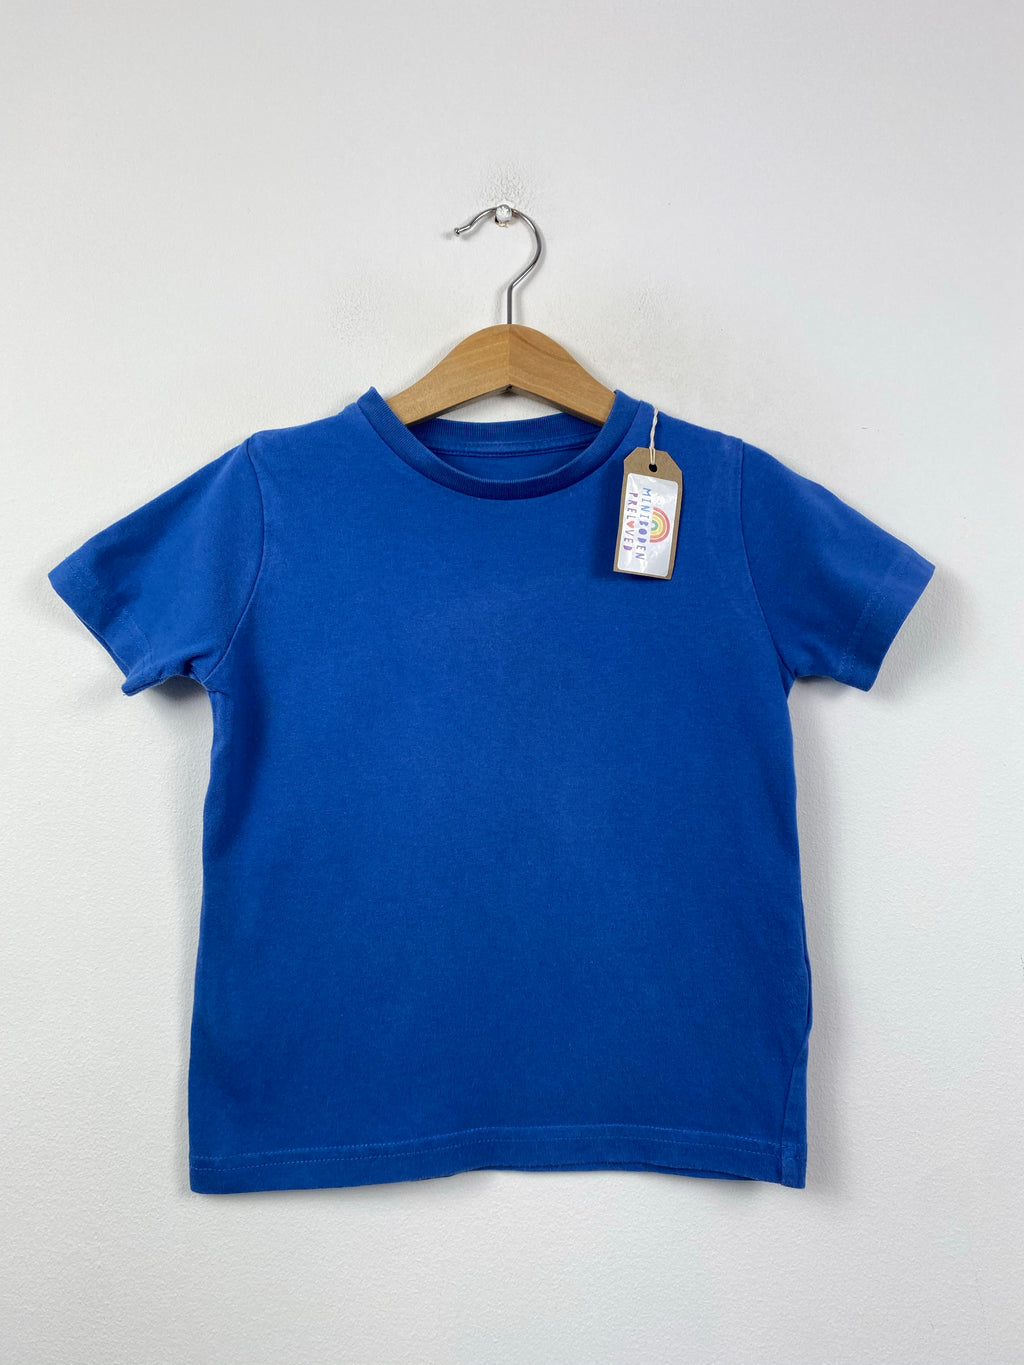 Blue Short Sleeved T-Shirt (4-5 Years)